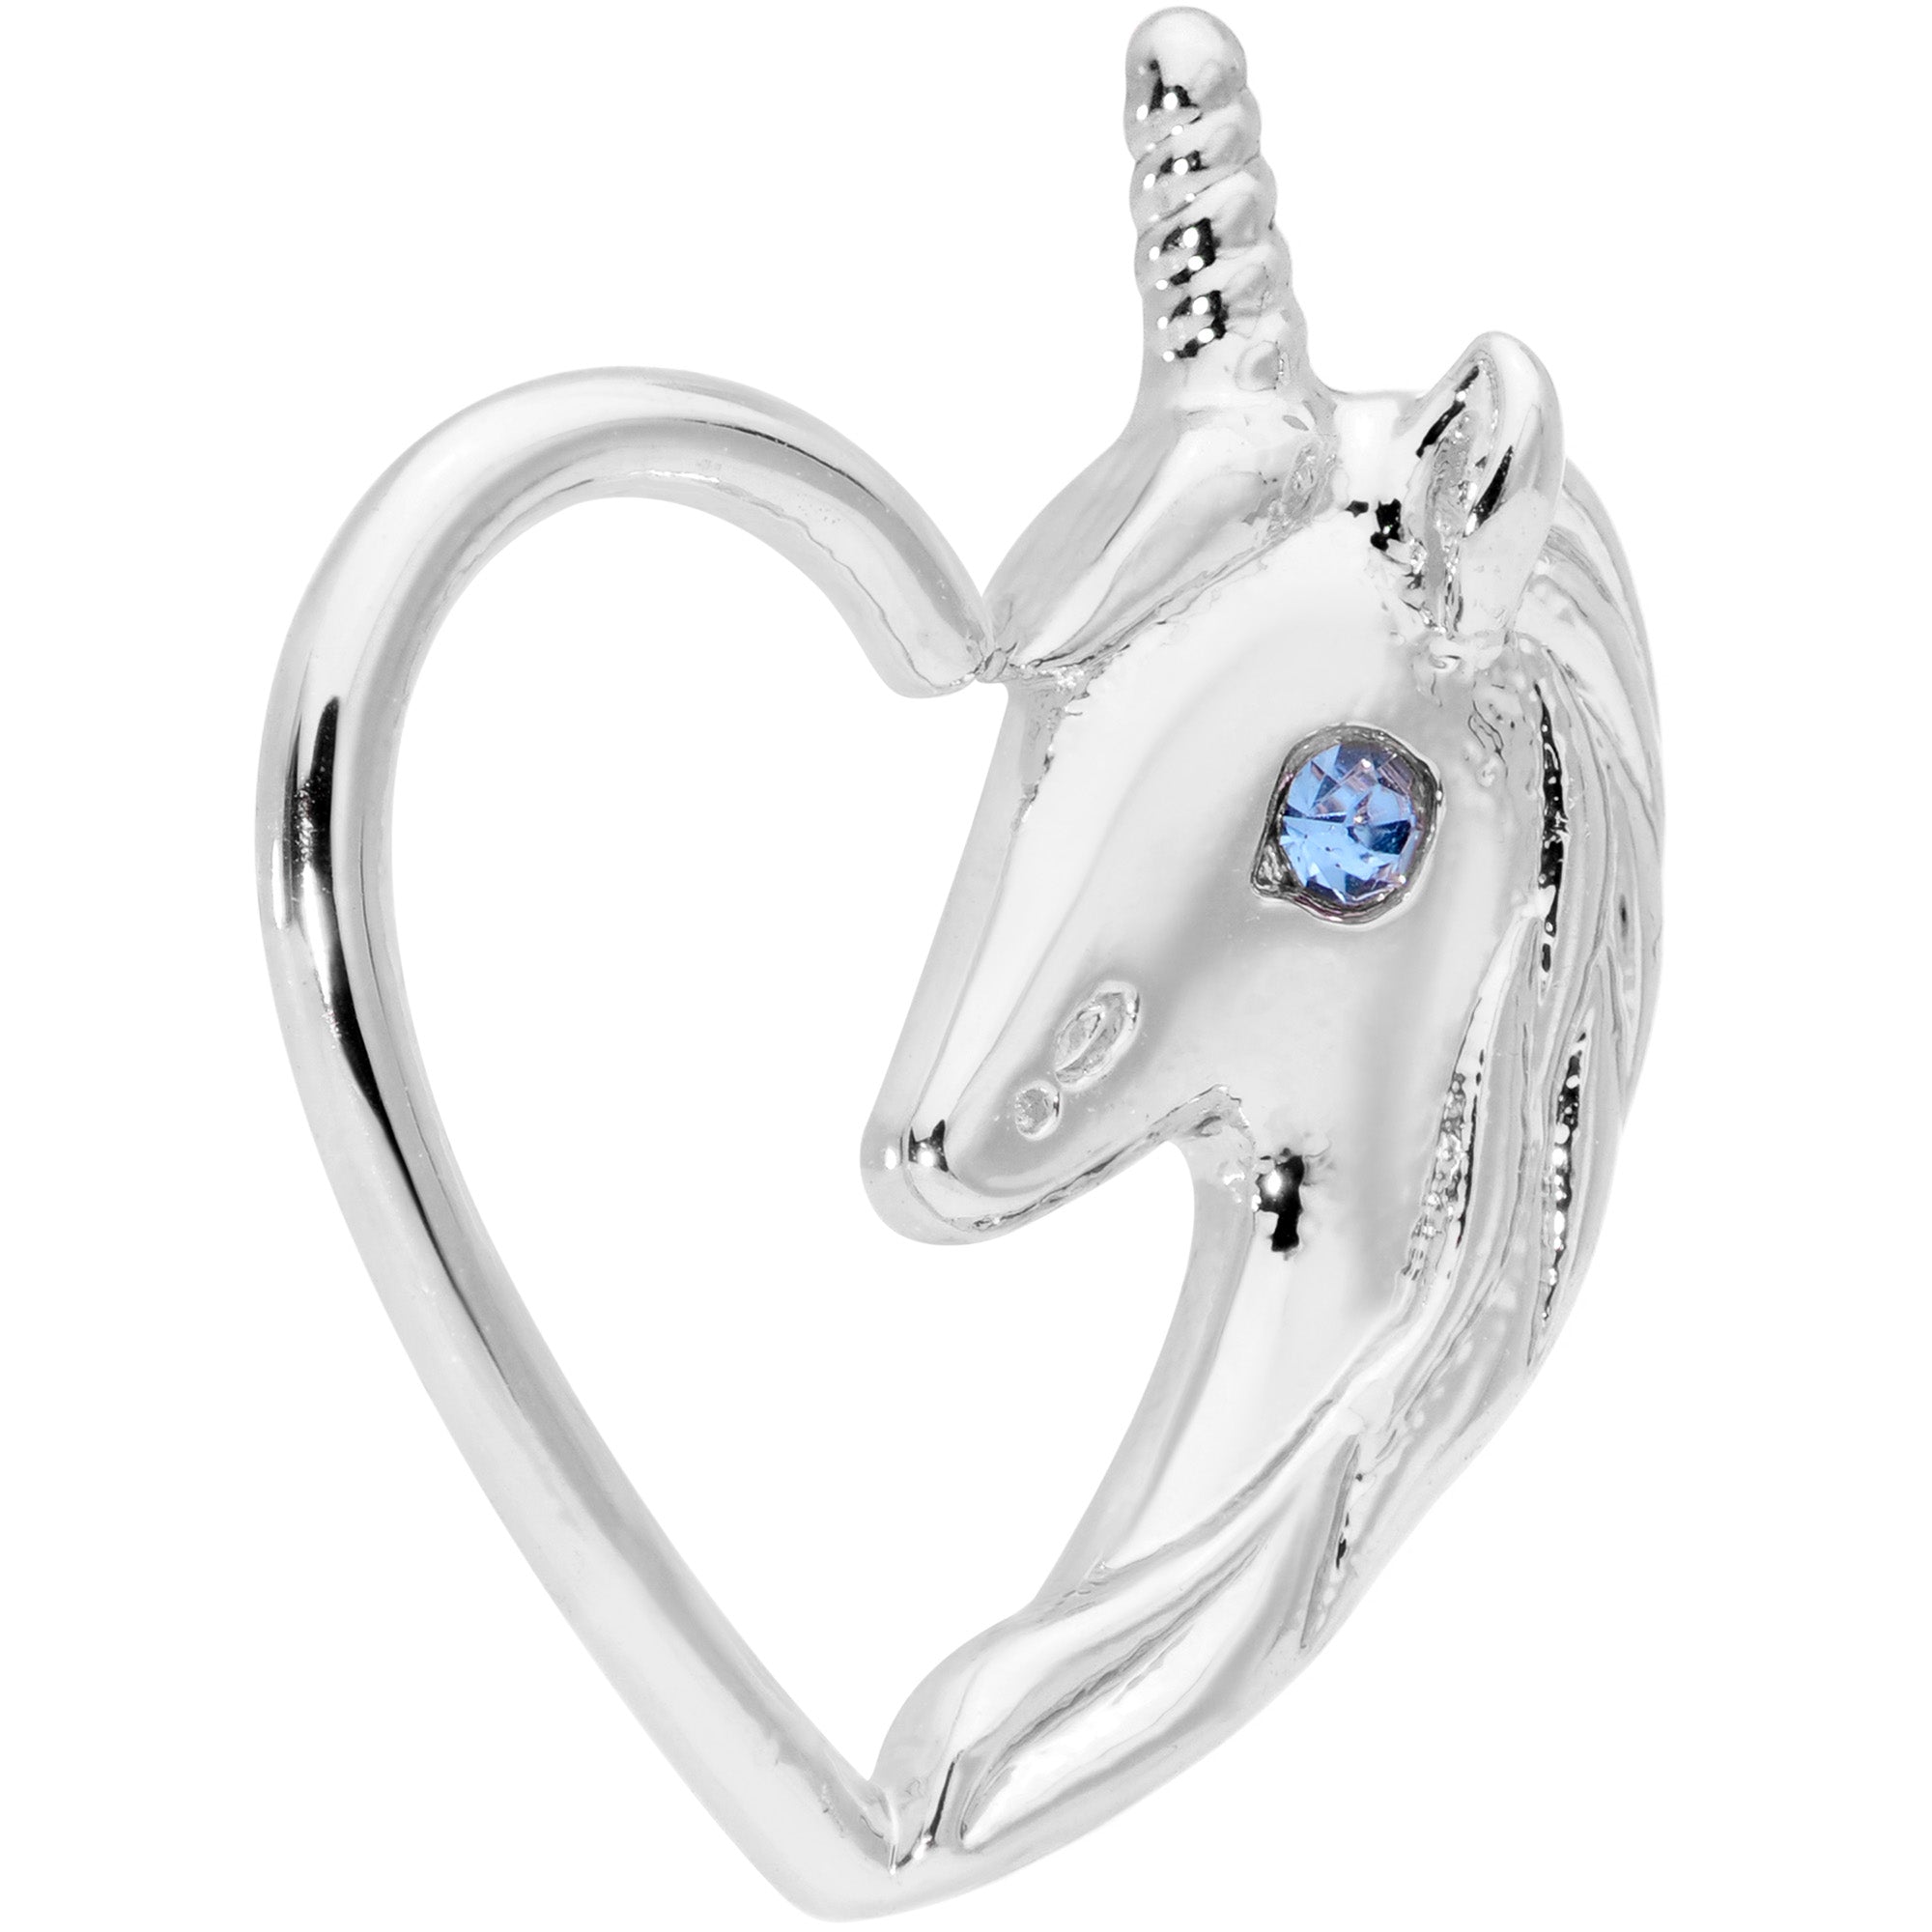 18 Gauge 5/16 Blue Gem Unicorn Left Heart Closure Ring